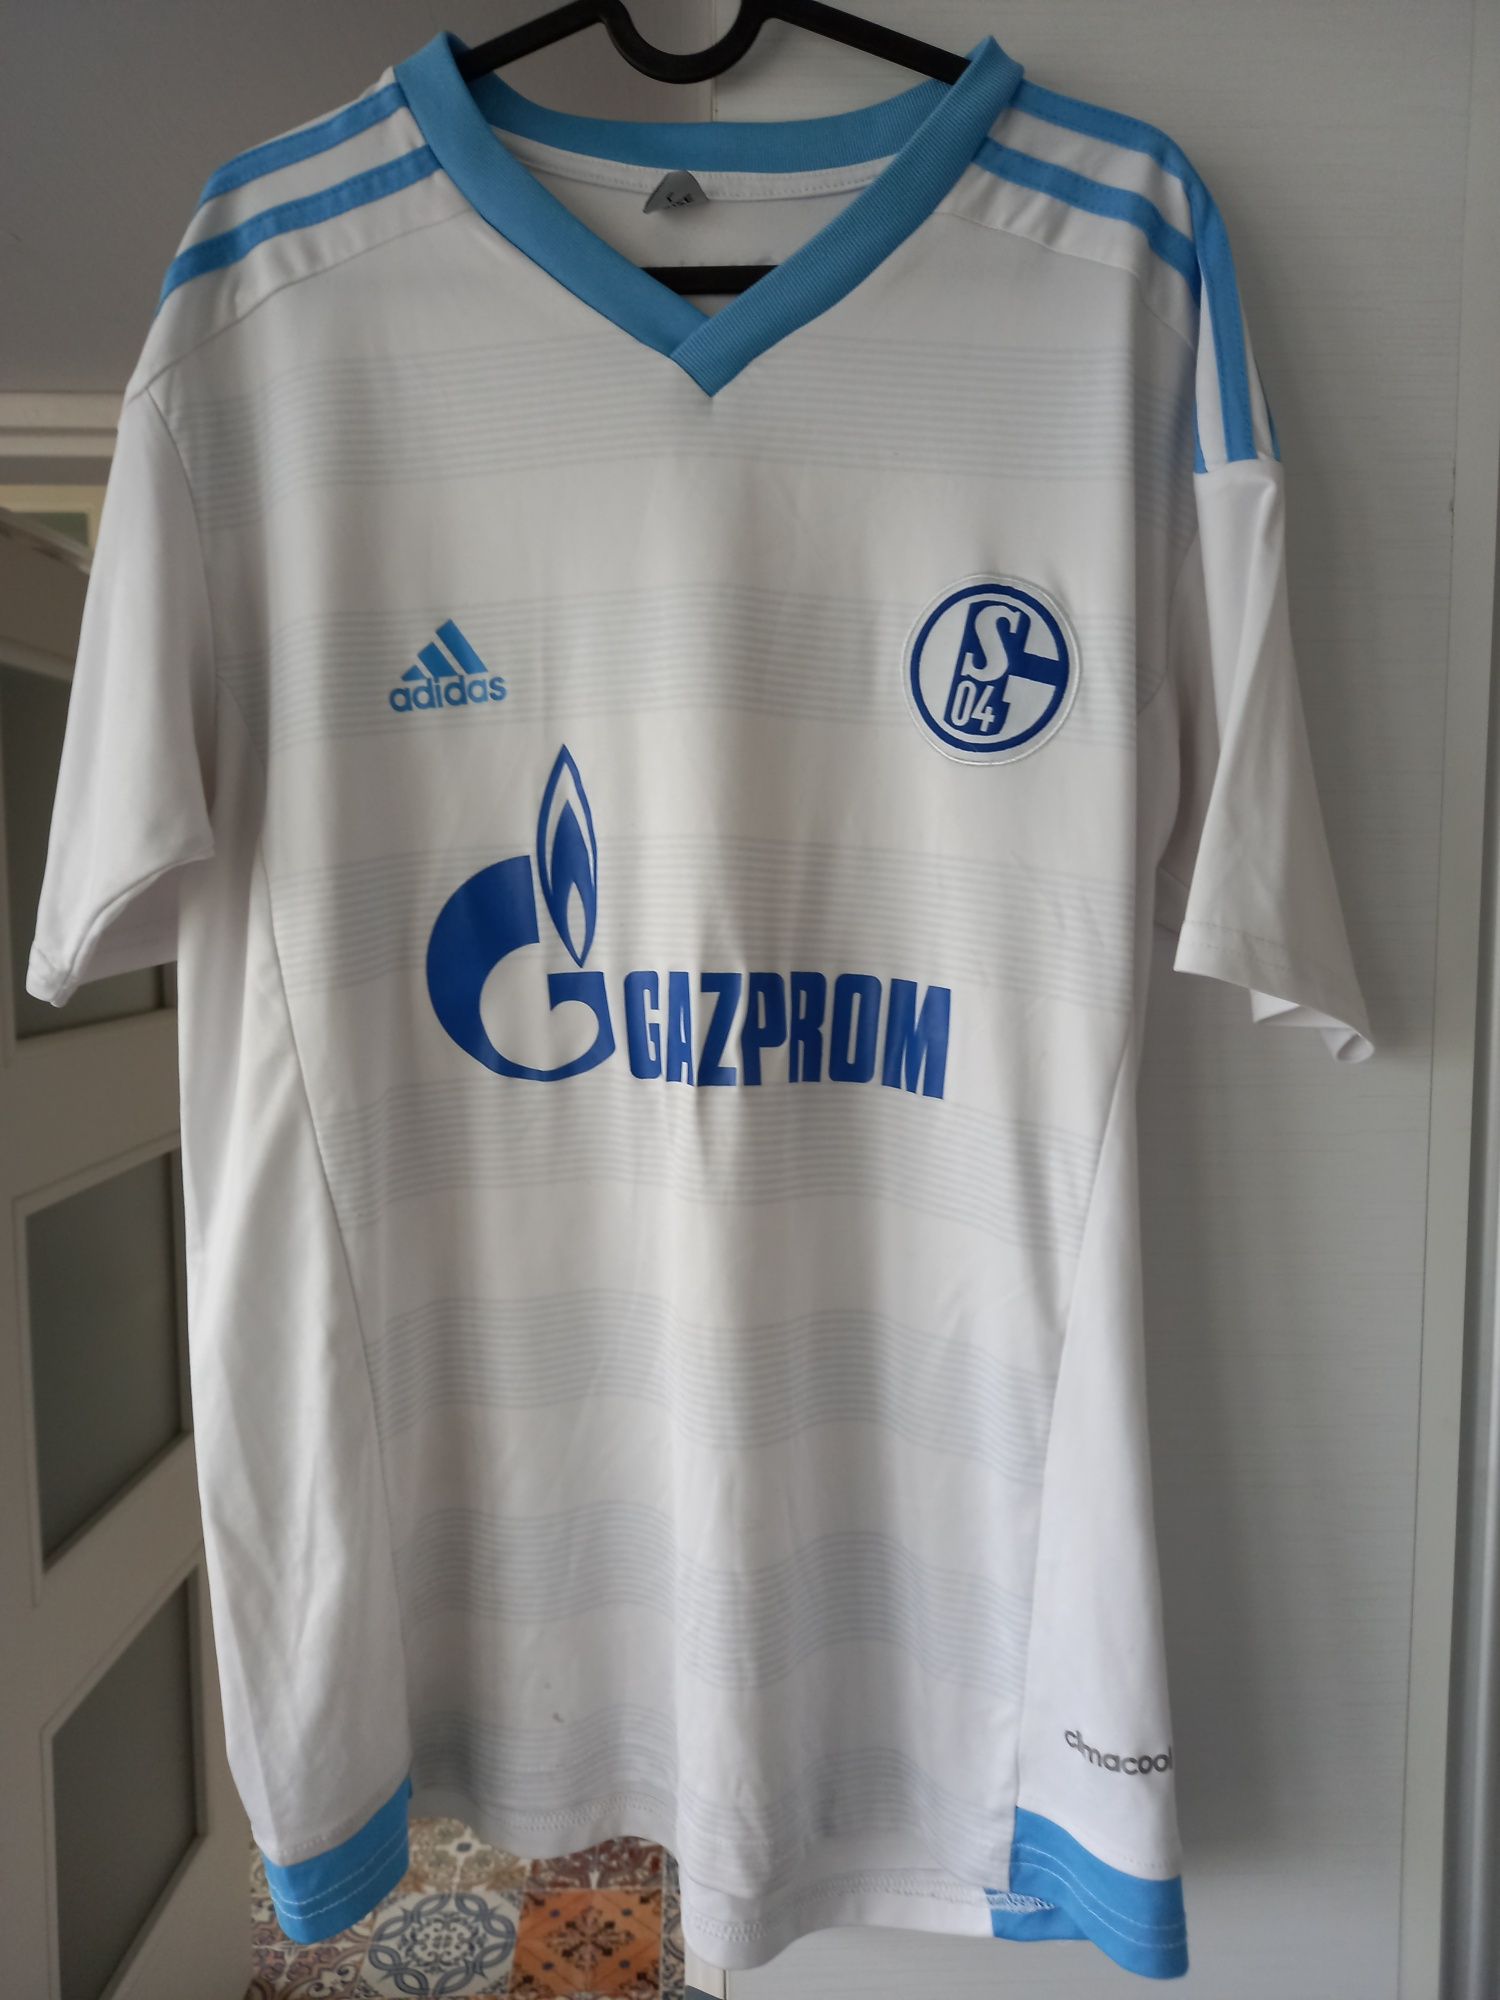 Koszulka Adidas Schalke 04 Gelsenkirchen roz L